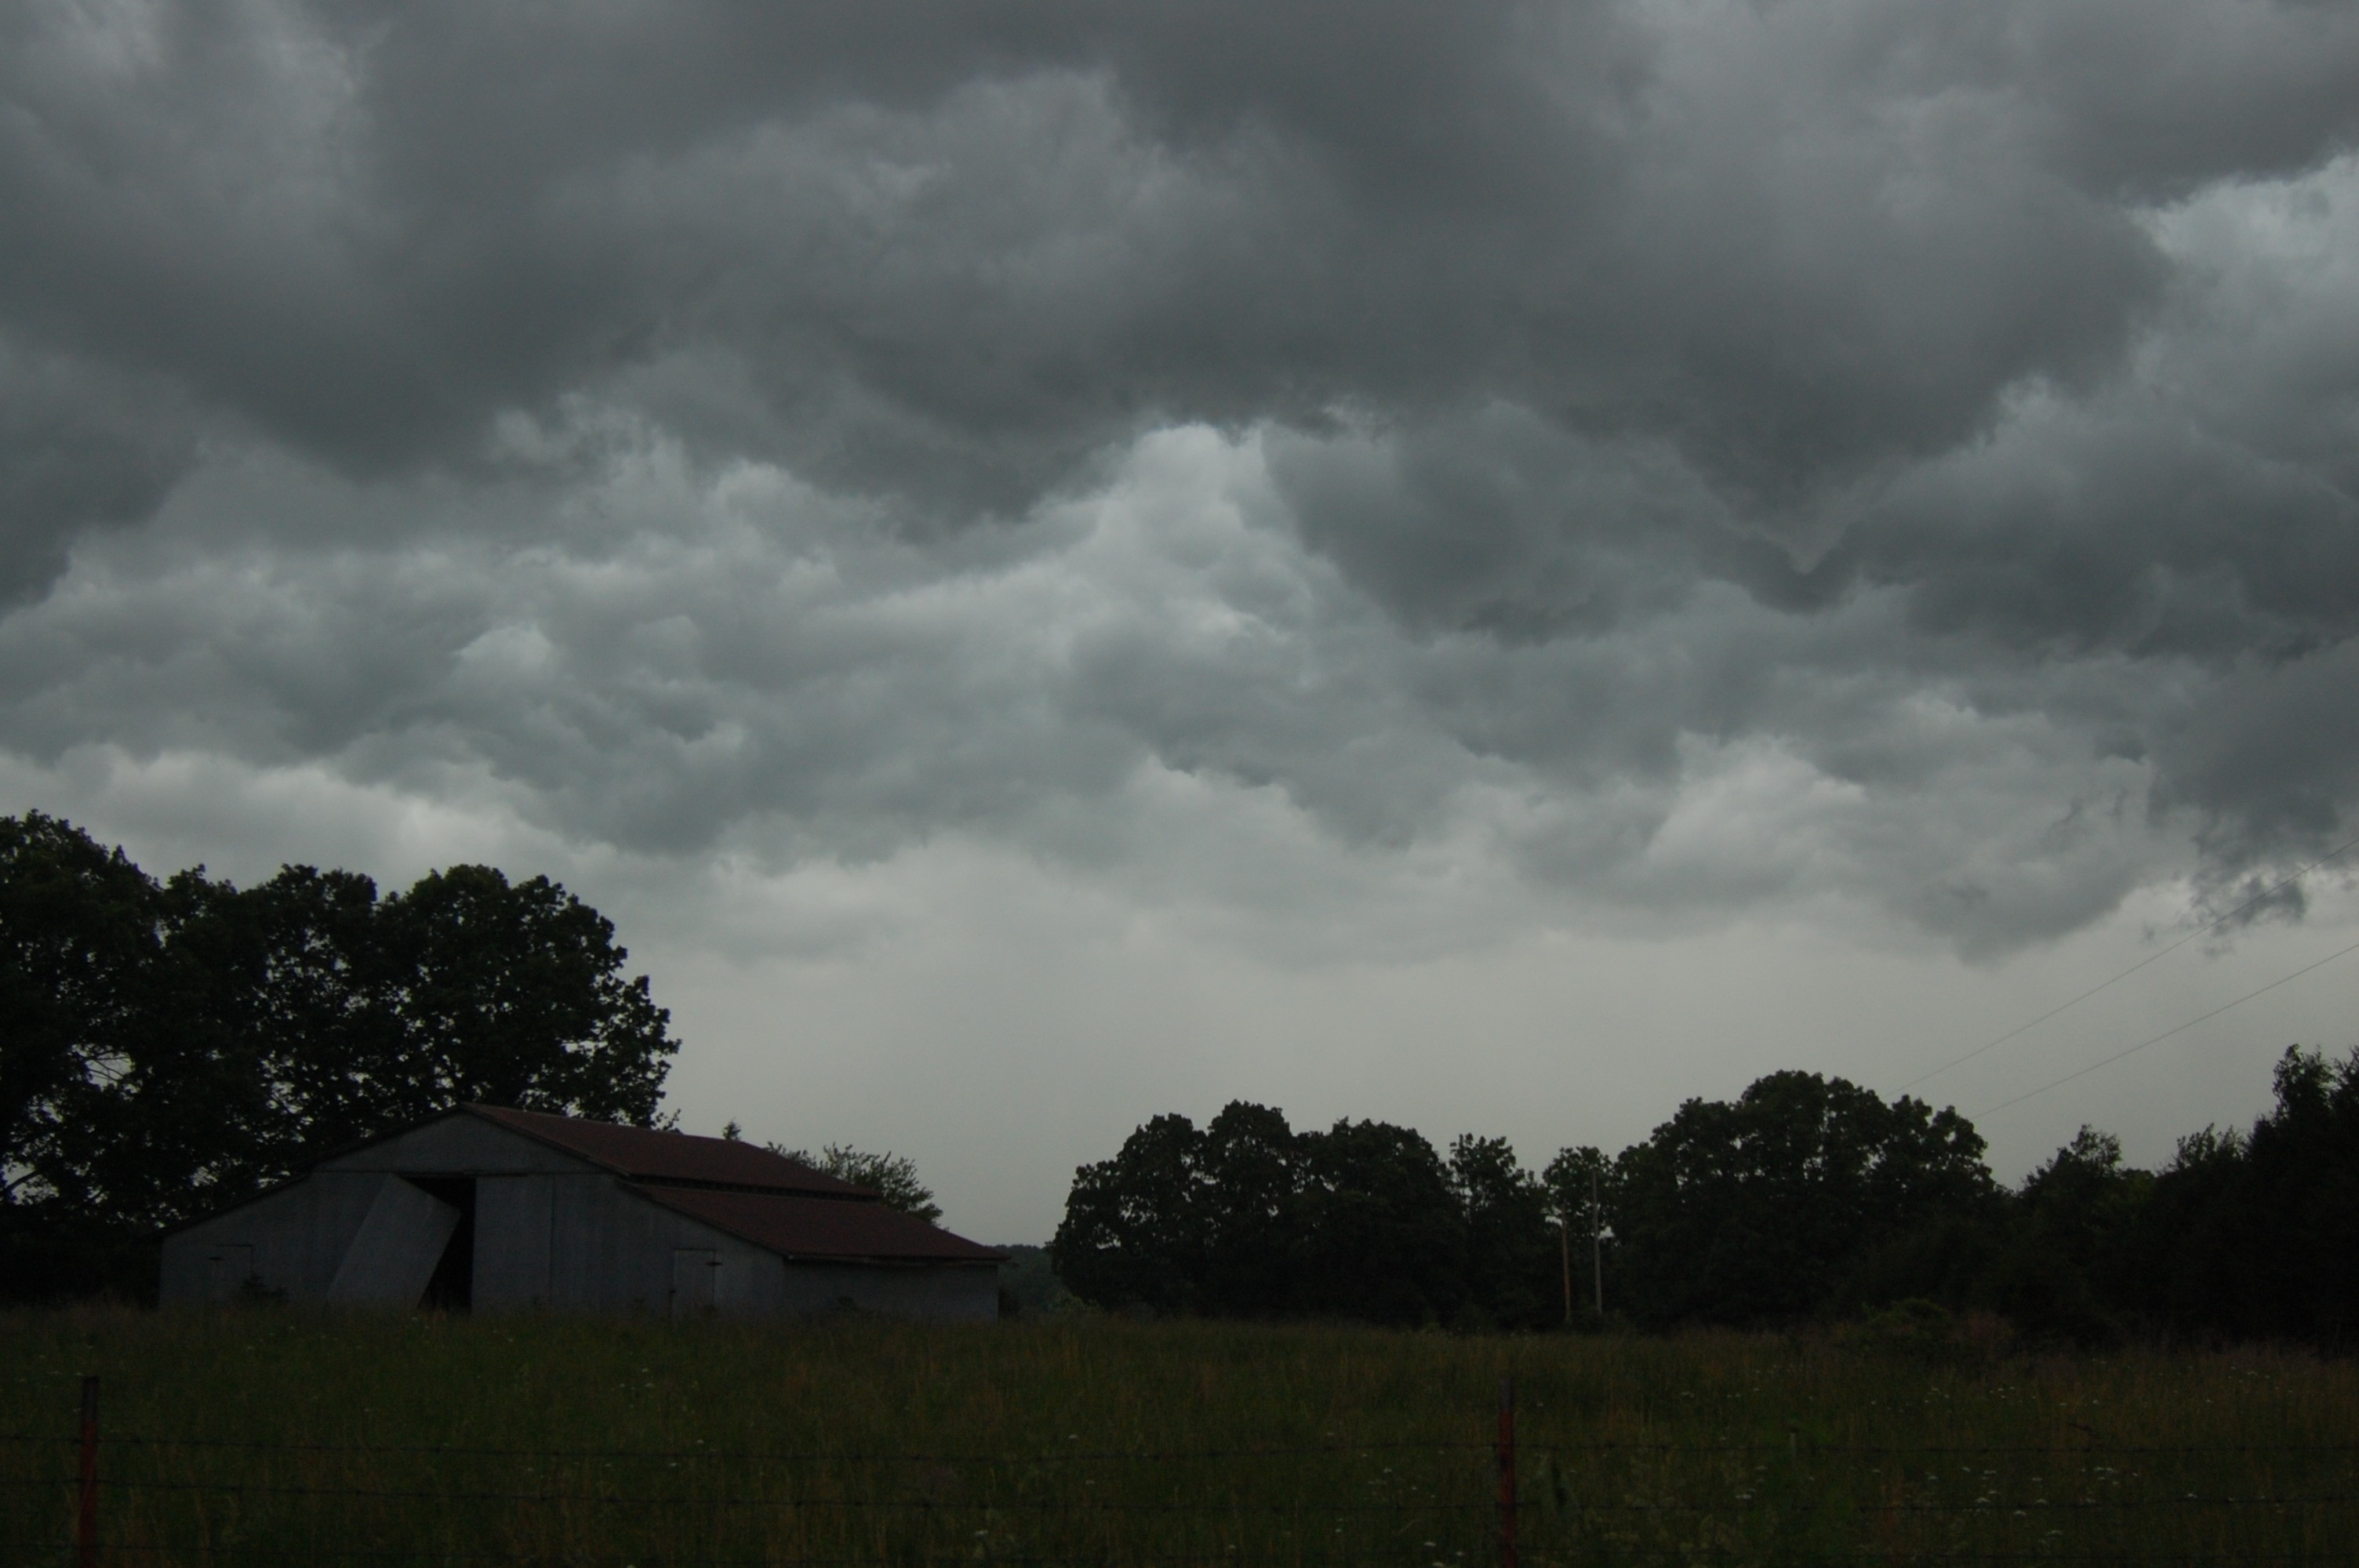 stone-county-sky-morning-after-joplin-tornado-9-45-am-may-23-2011.jpg